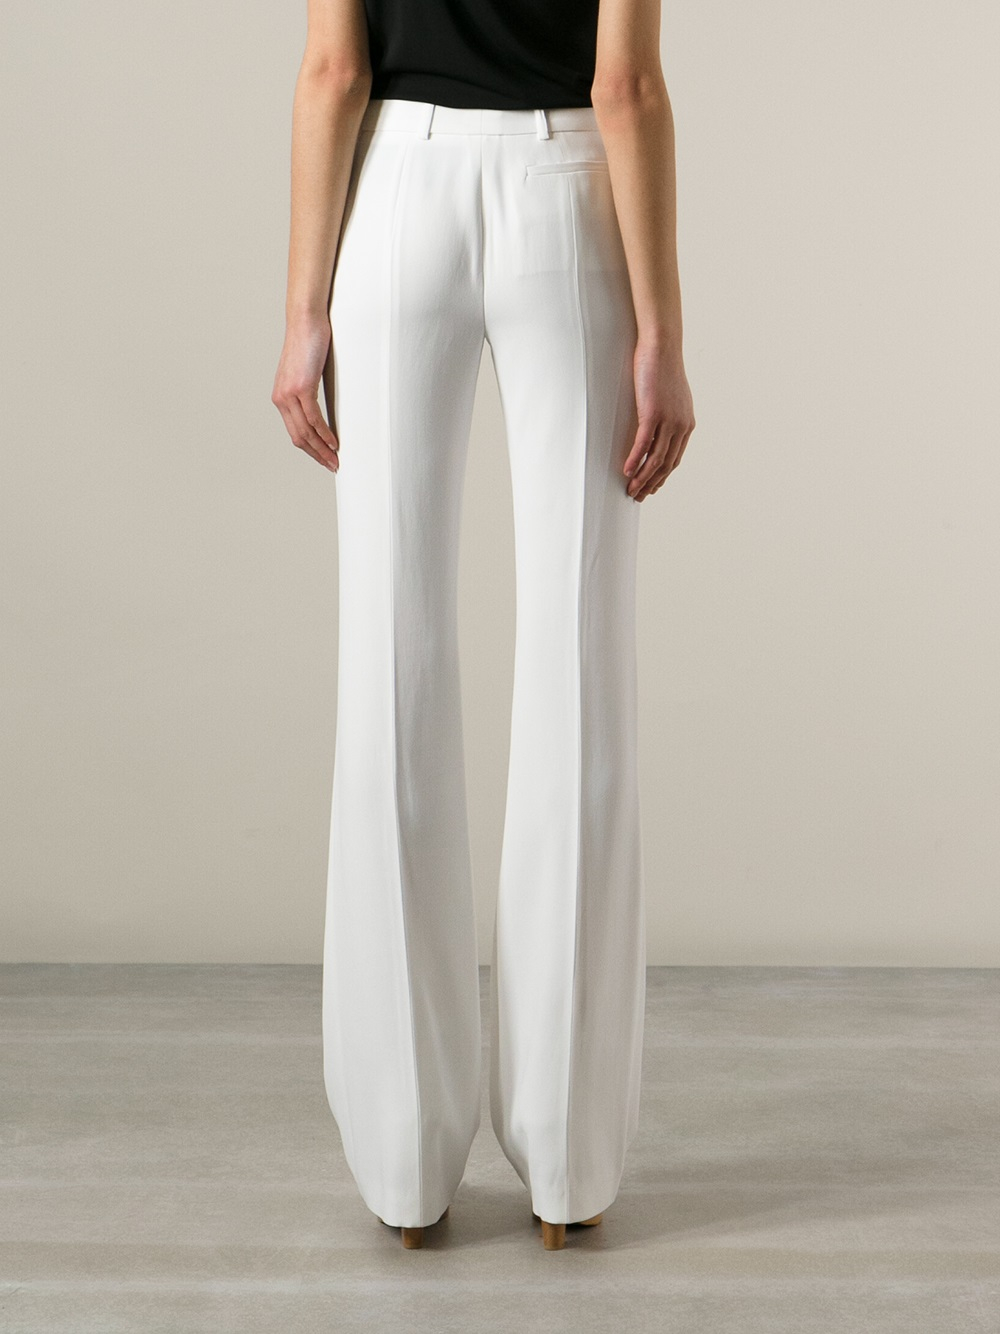 Alexander McQueen Bootcut Trouser in White - Lyst